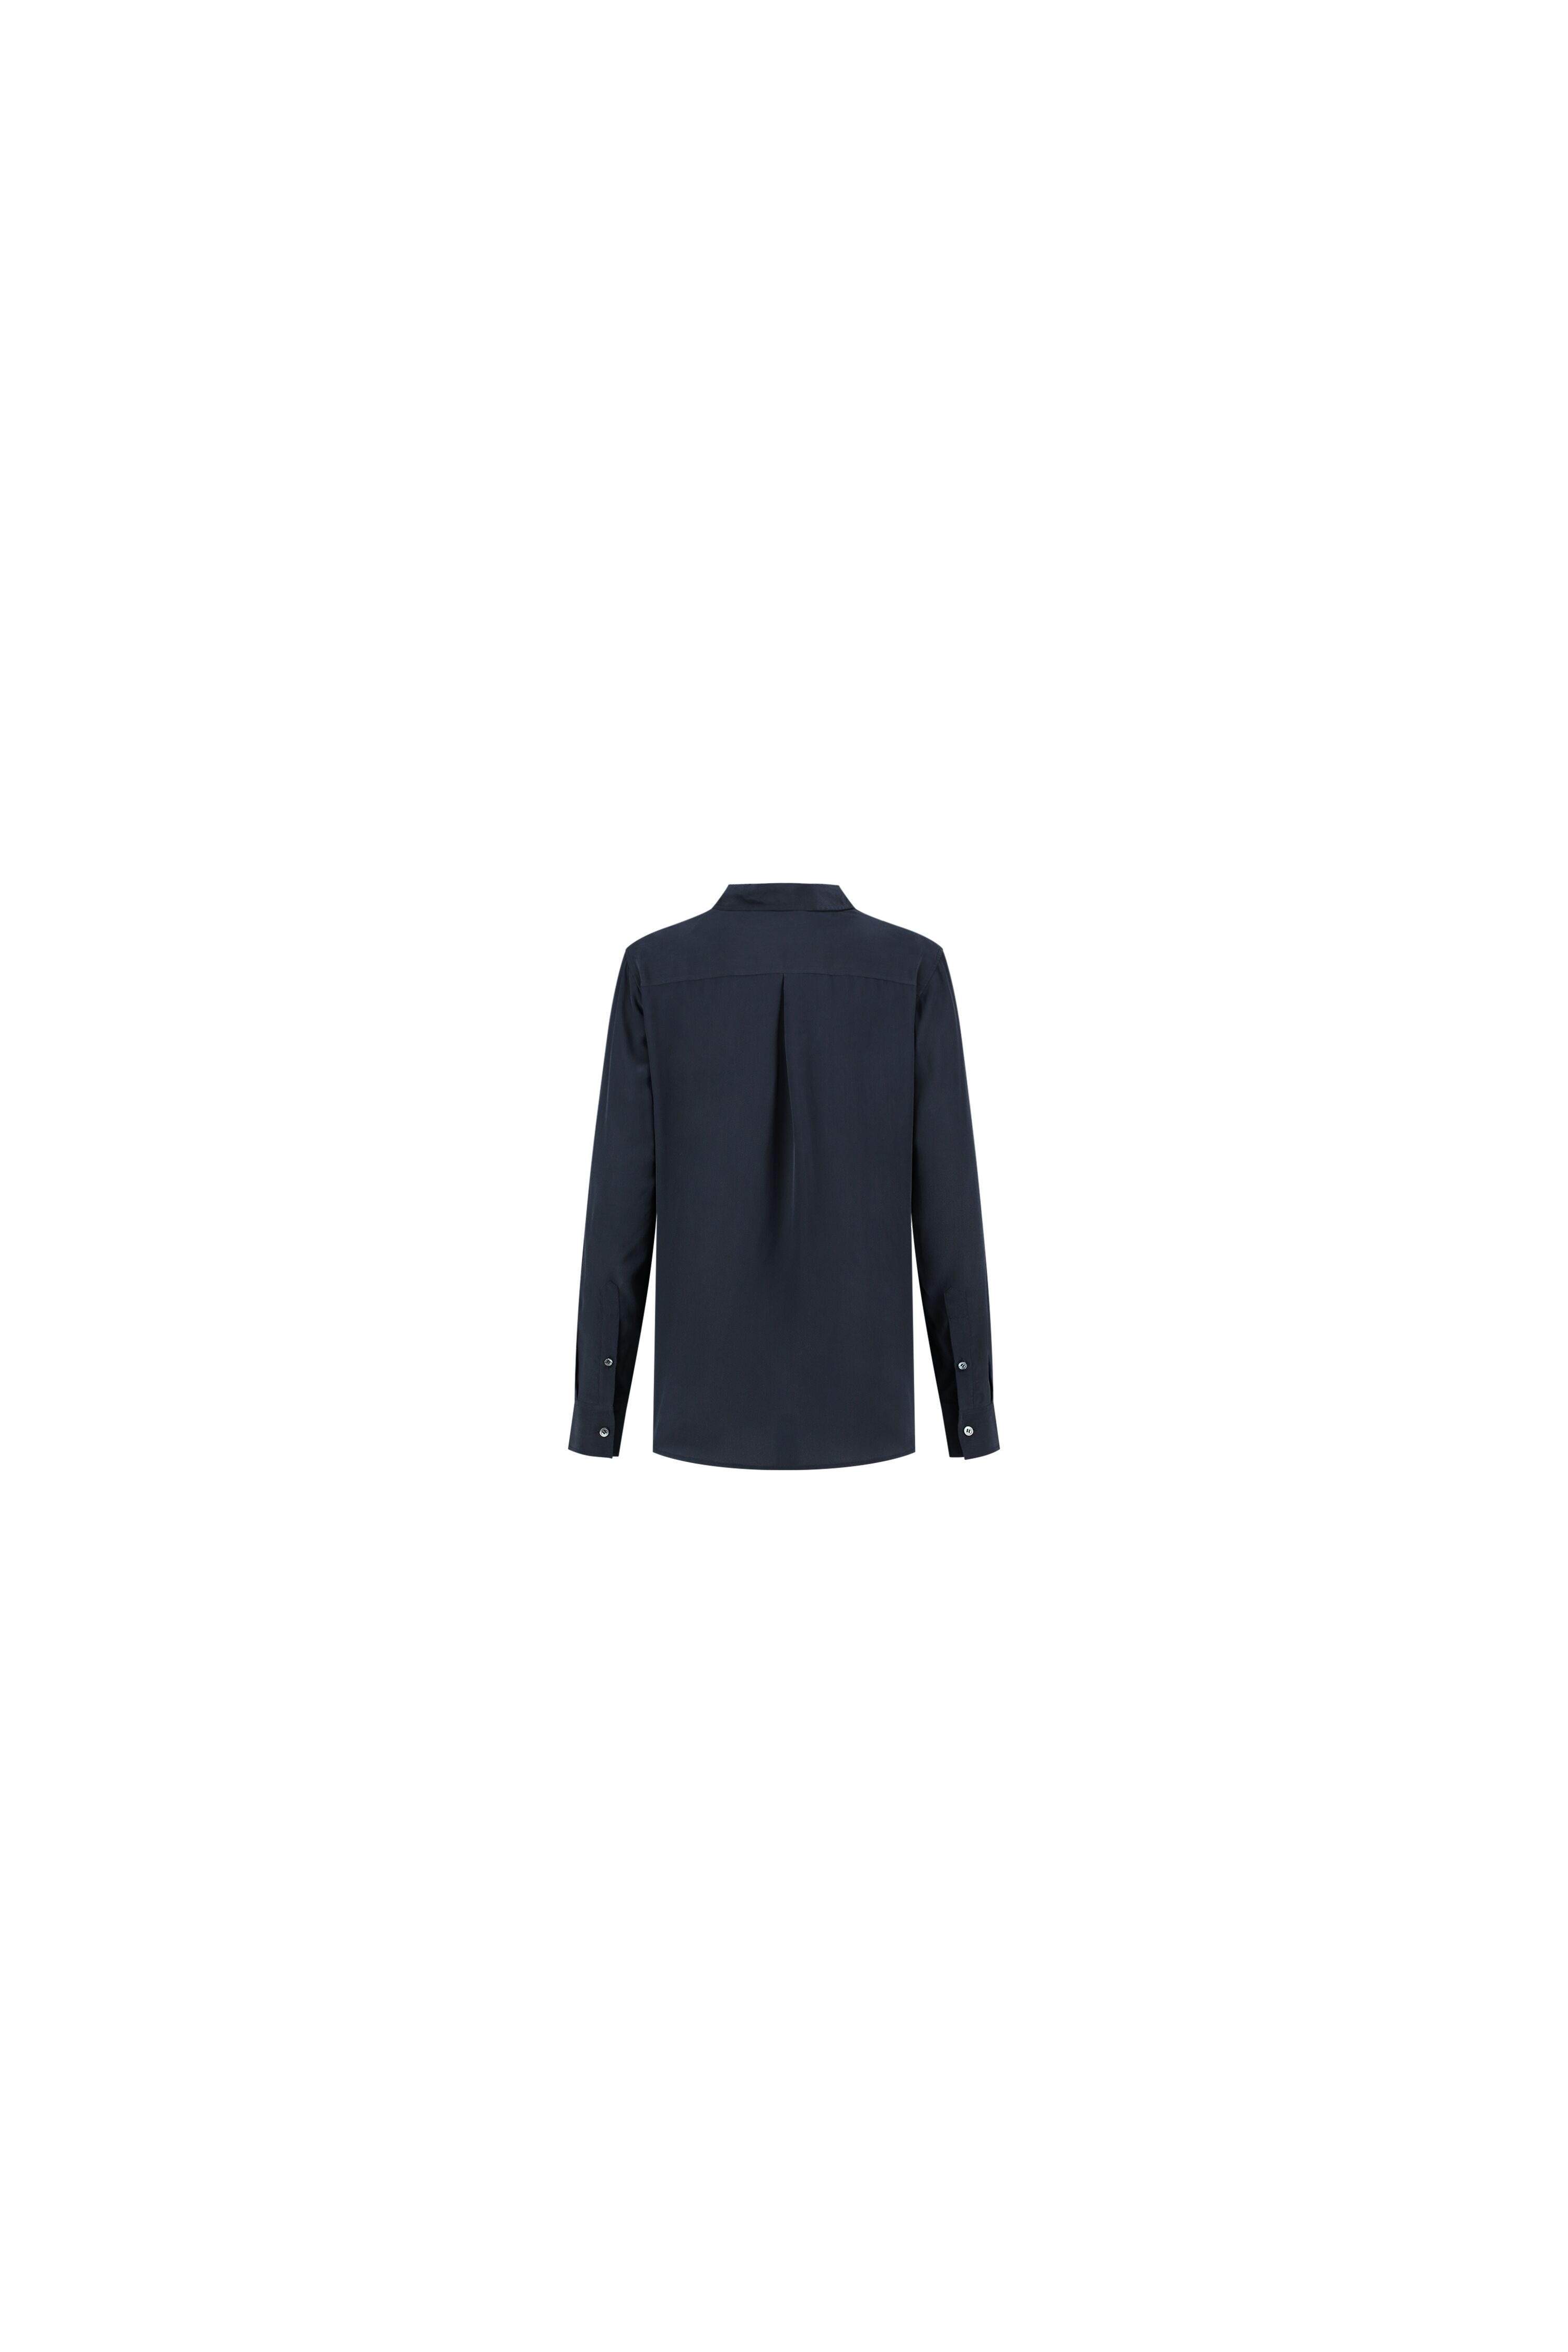 Filippa K Classic Silk Shirt Navy - 19539 2830 | Bloom Fashion